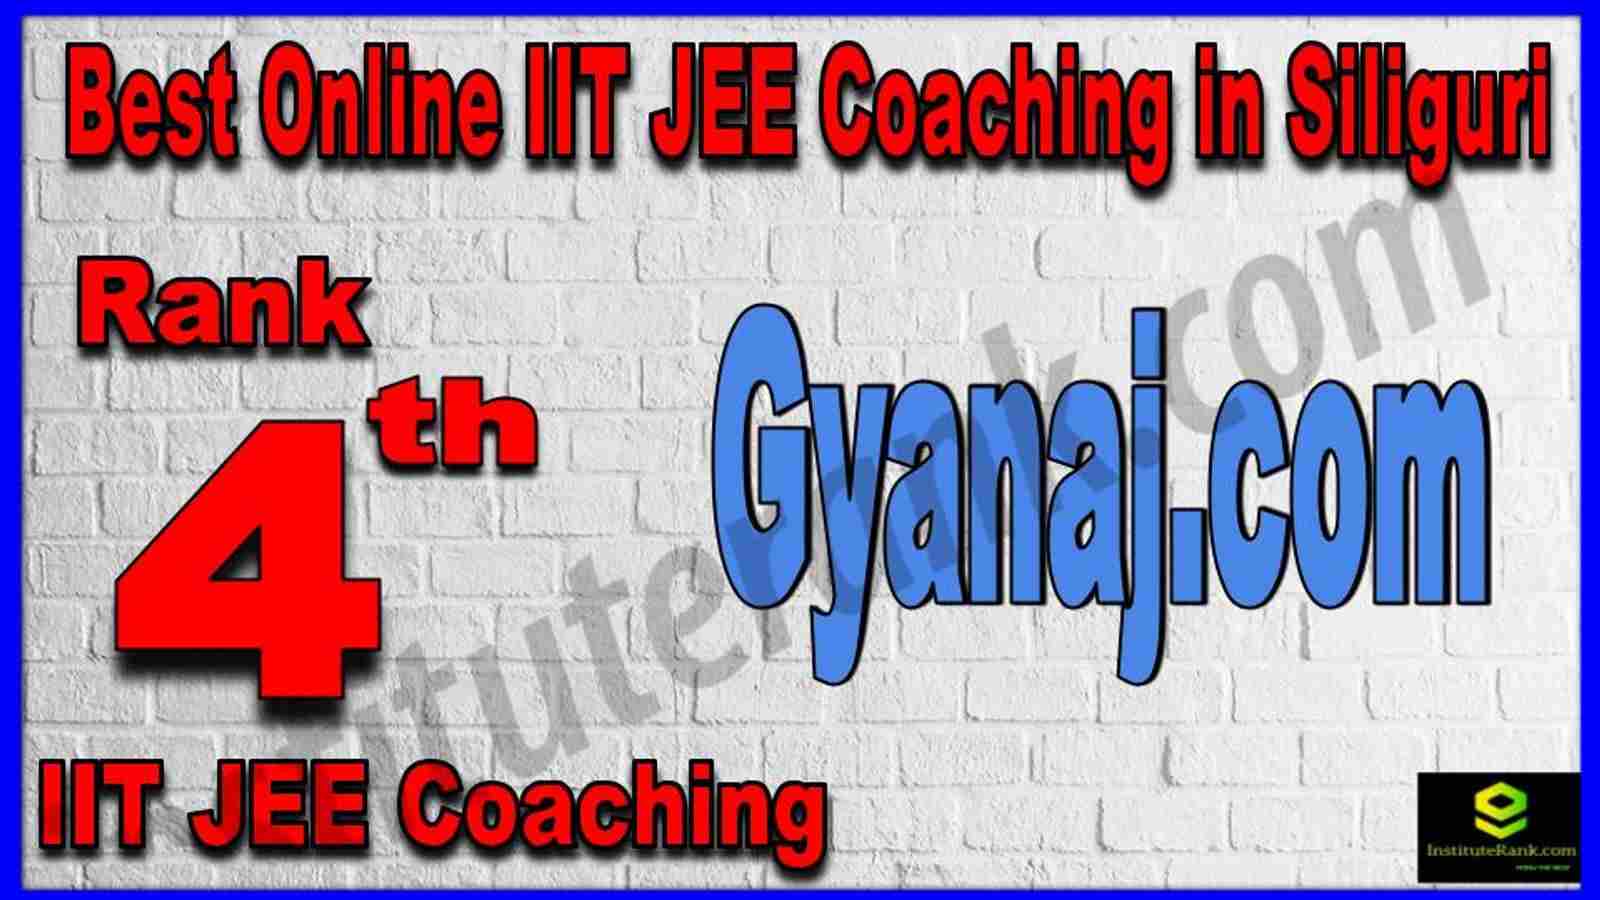 Rank 4th Best Online IIT-JEE Coaching in Siliguri